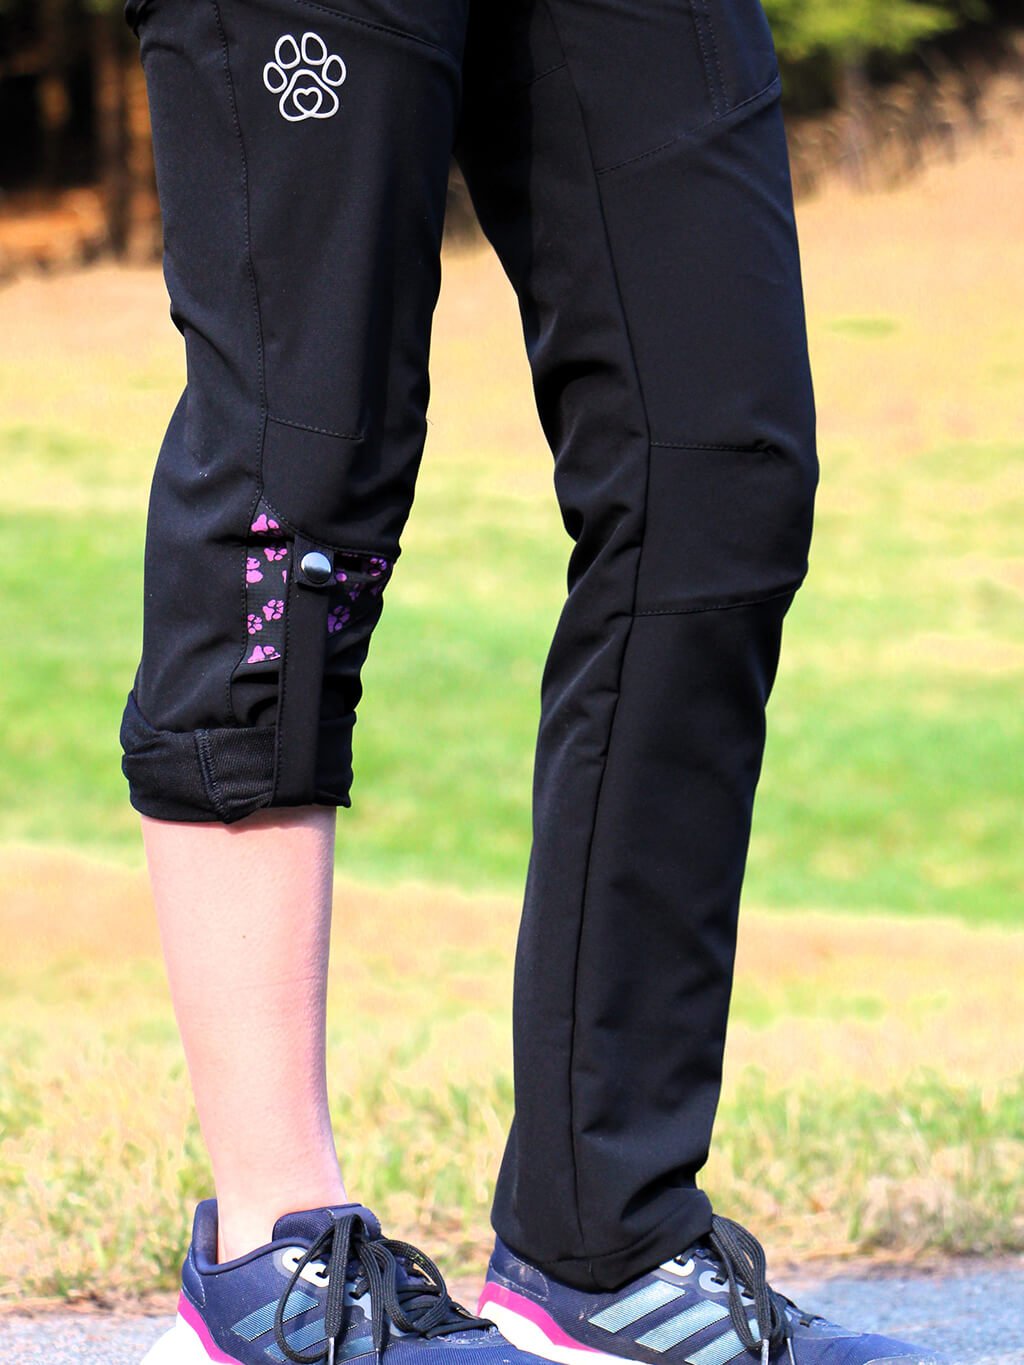 Women's spring training trousers - black 4dox